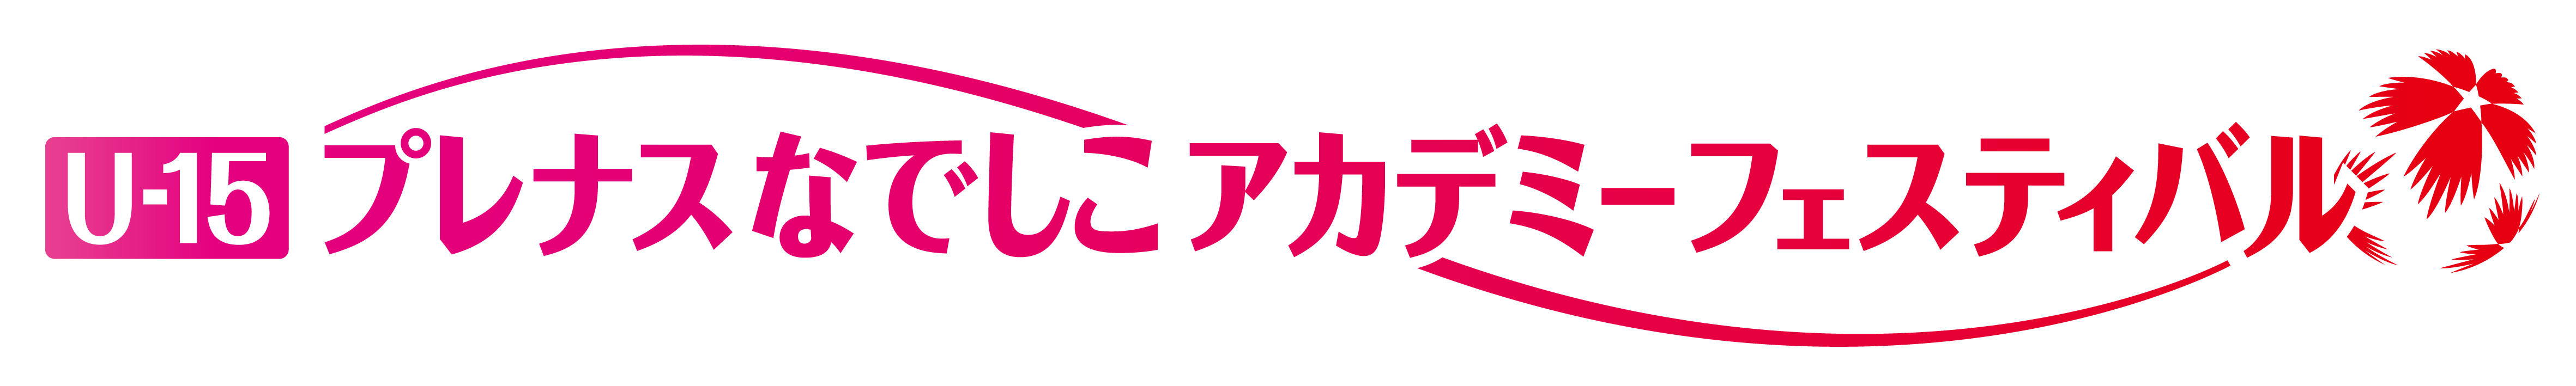 nadeshiko_U15_logo_fin.jpg